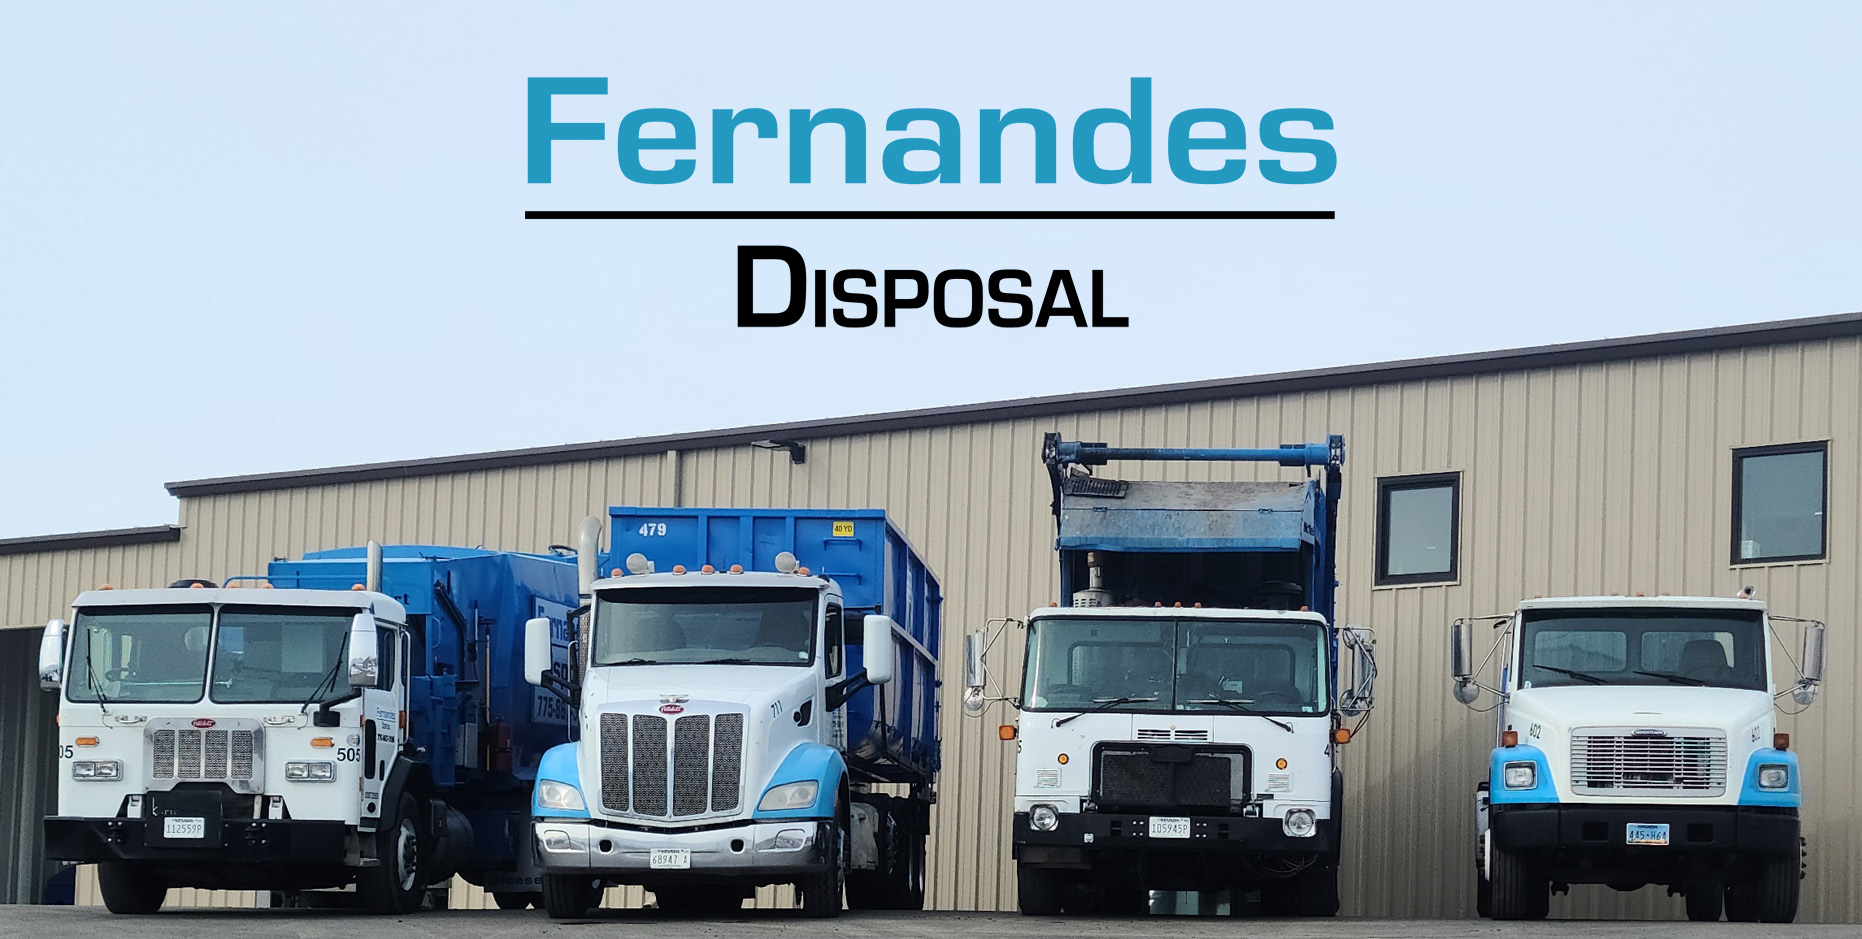 Fernandez-Disposal-1